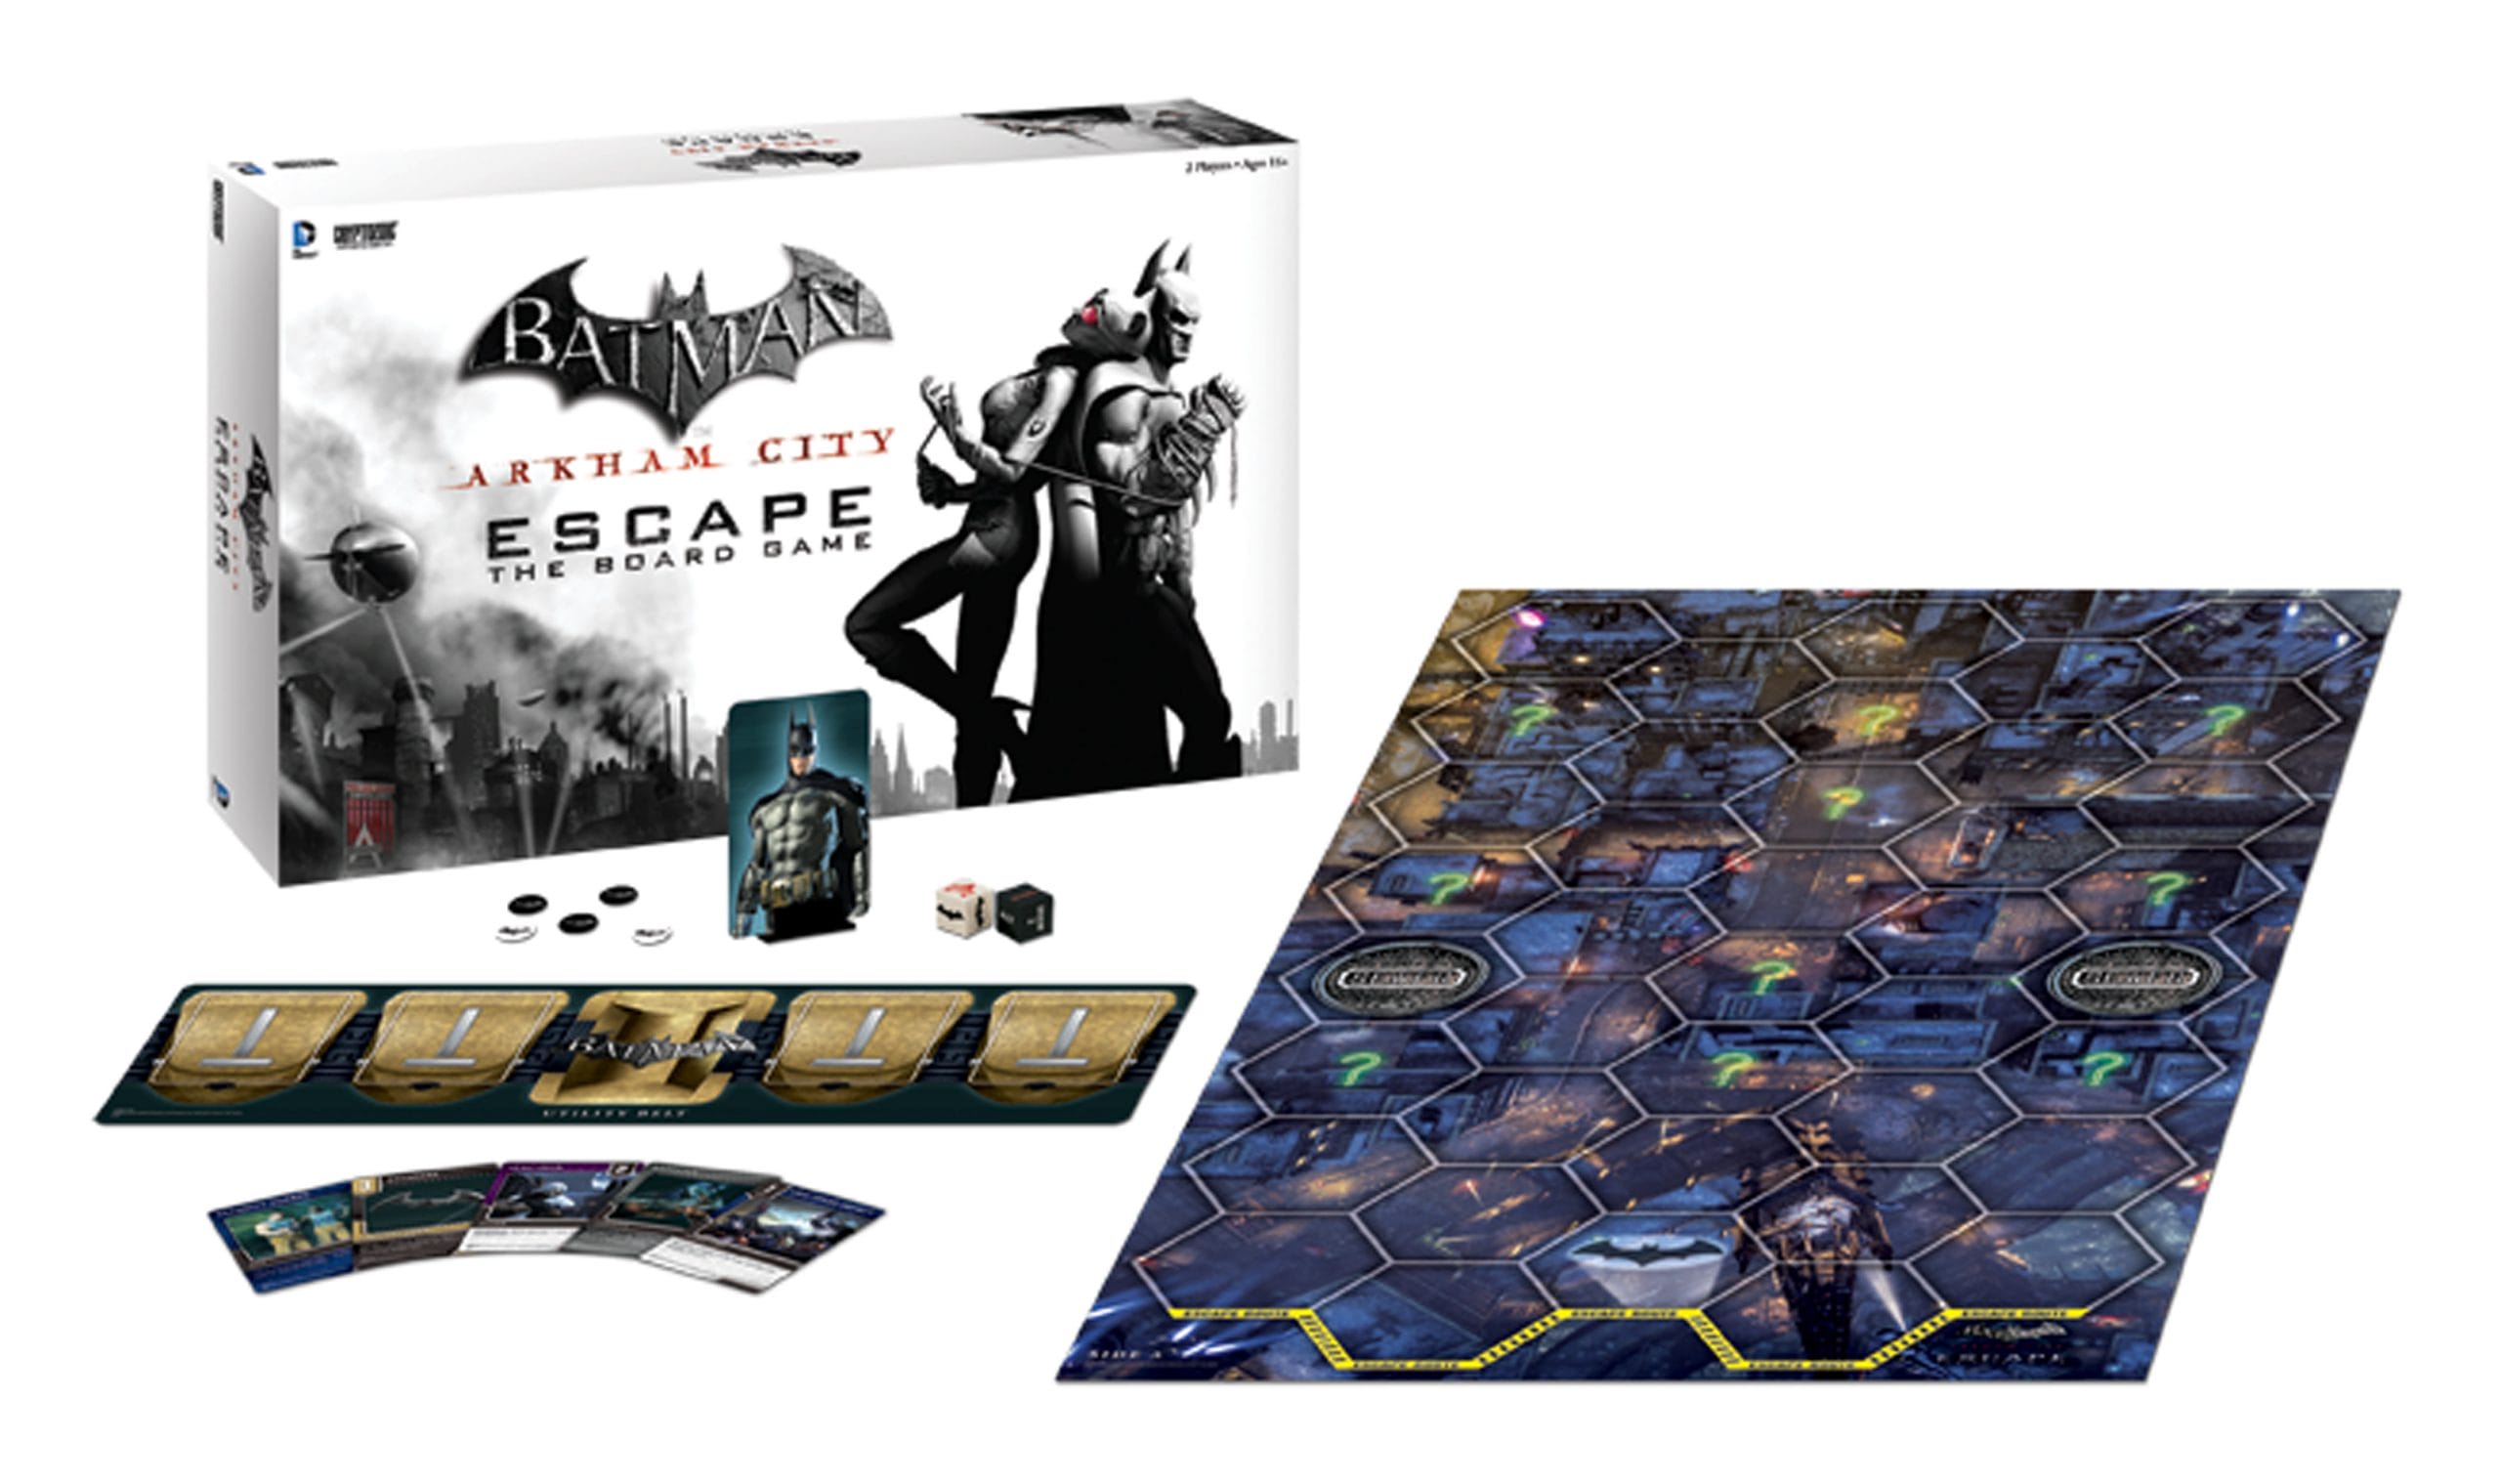 A look inside: Batman - Arkham City Escape board game